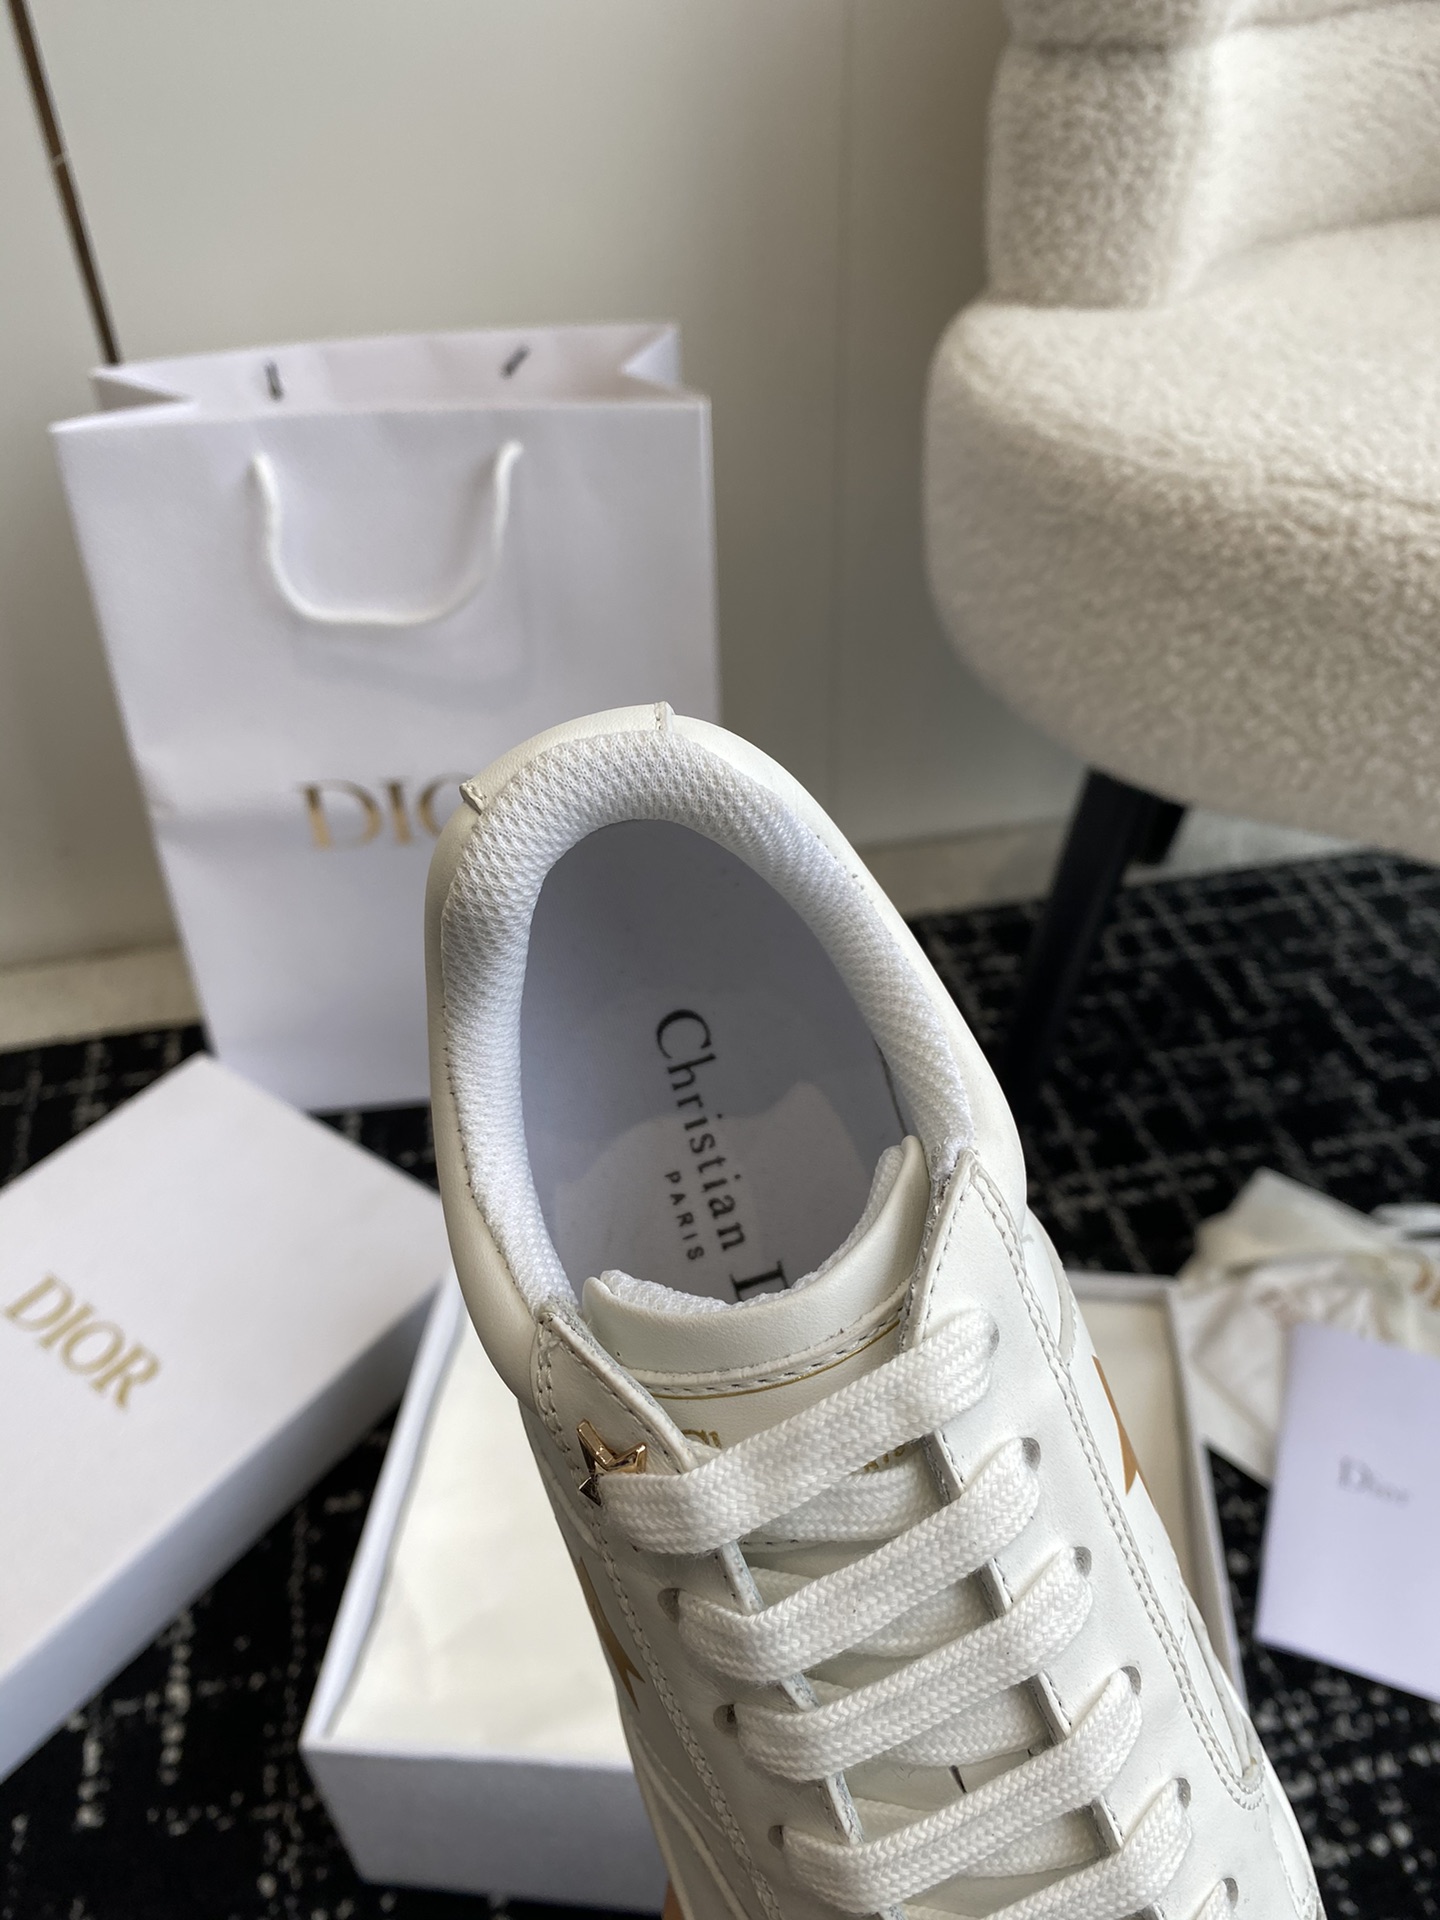 Dior新款小白鞋迪奥DiorStar女士运动鞋上脚非常轻便的夏季小白鞋鞋面是白色小牛皮精心制作饰以同色